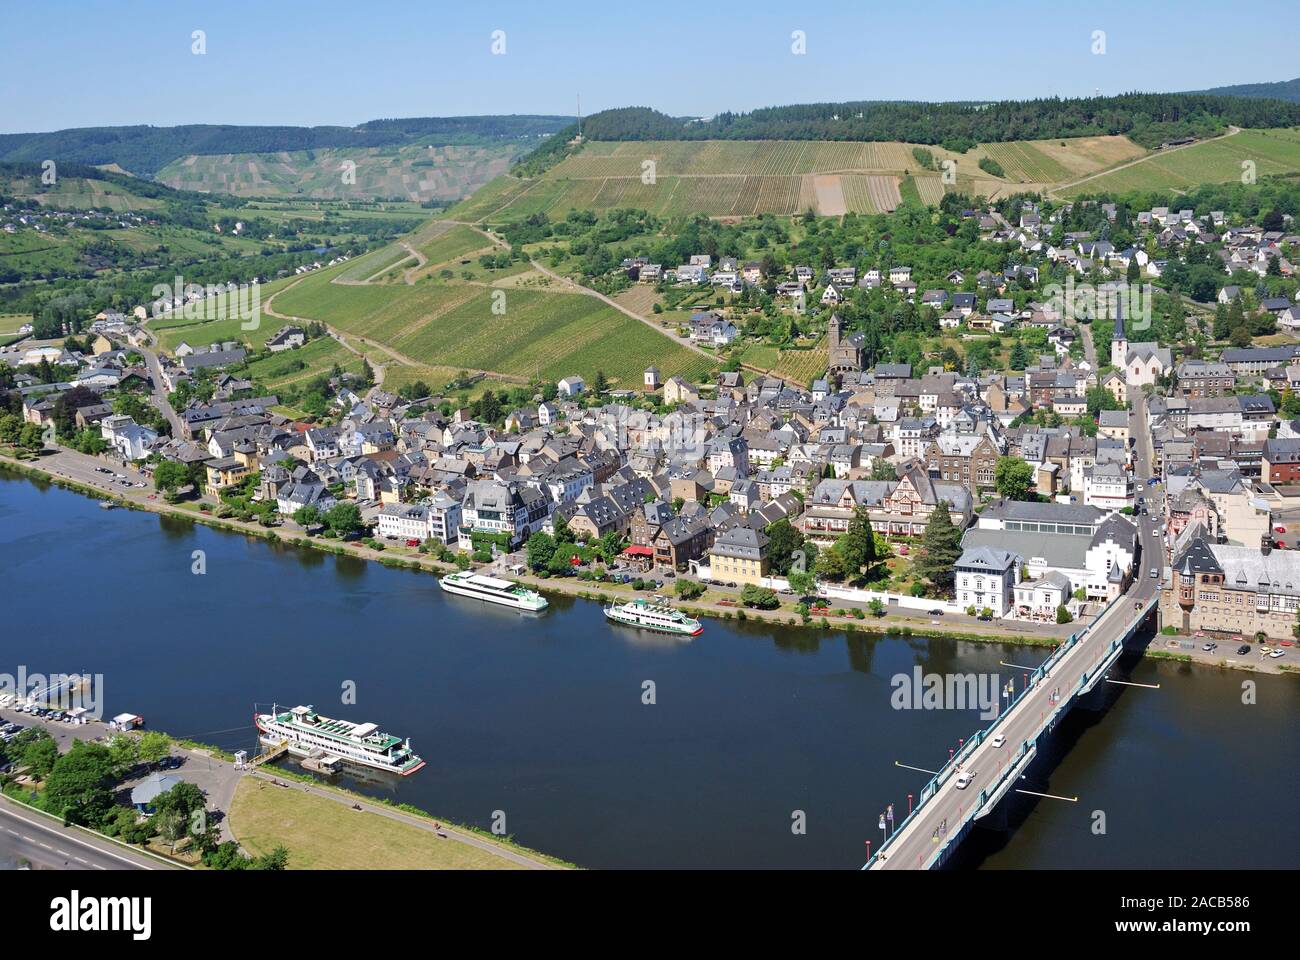 Traben-Trarbach, district de Traben, Moselle, district de Bernkastel-Wittlich, Rhénanie-Palatinat, Allemagne, Europe, PublicGrou Banque D'Images